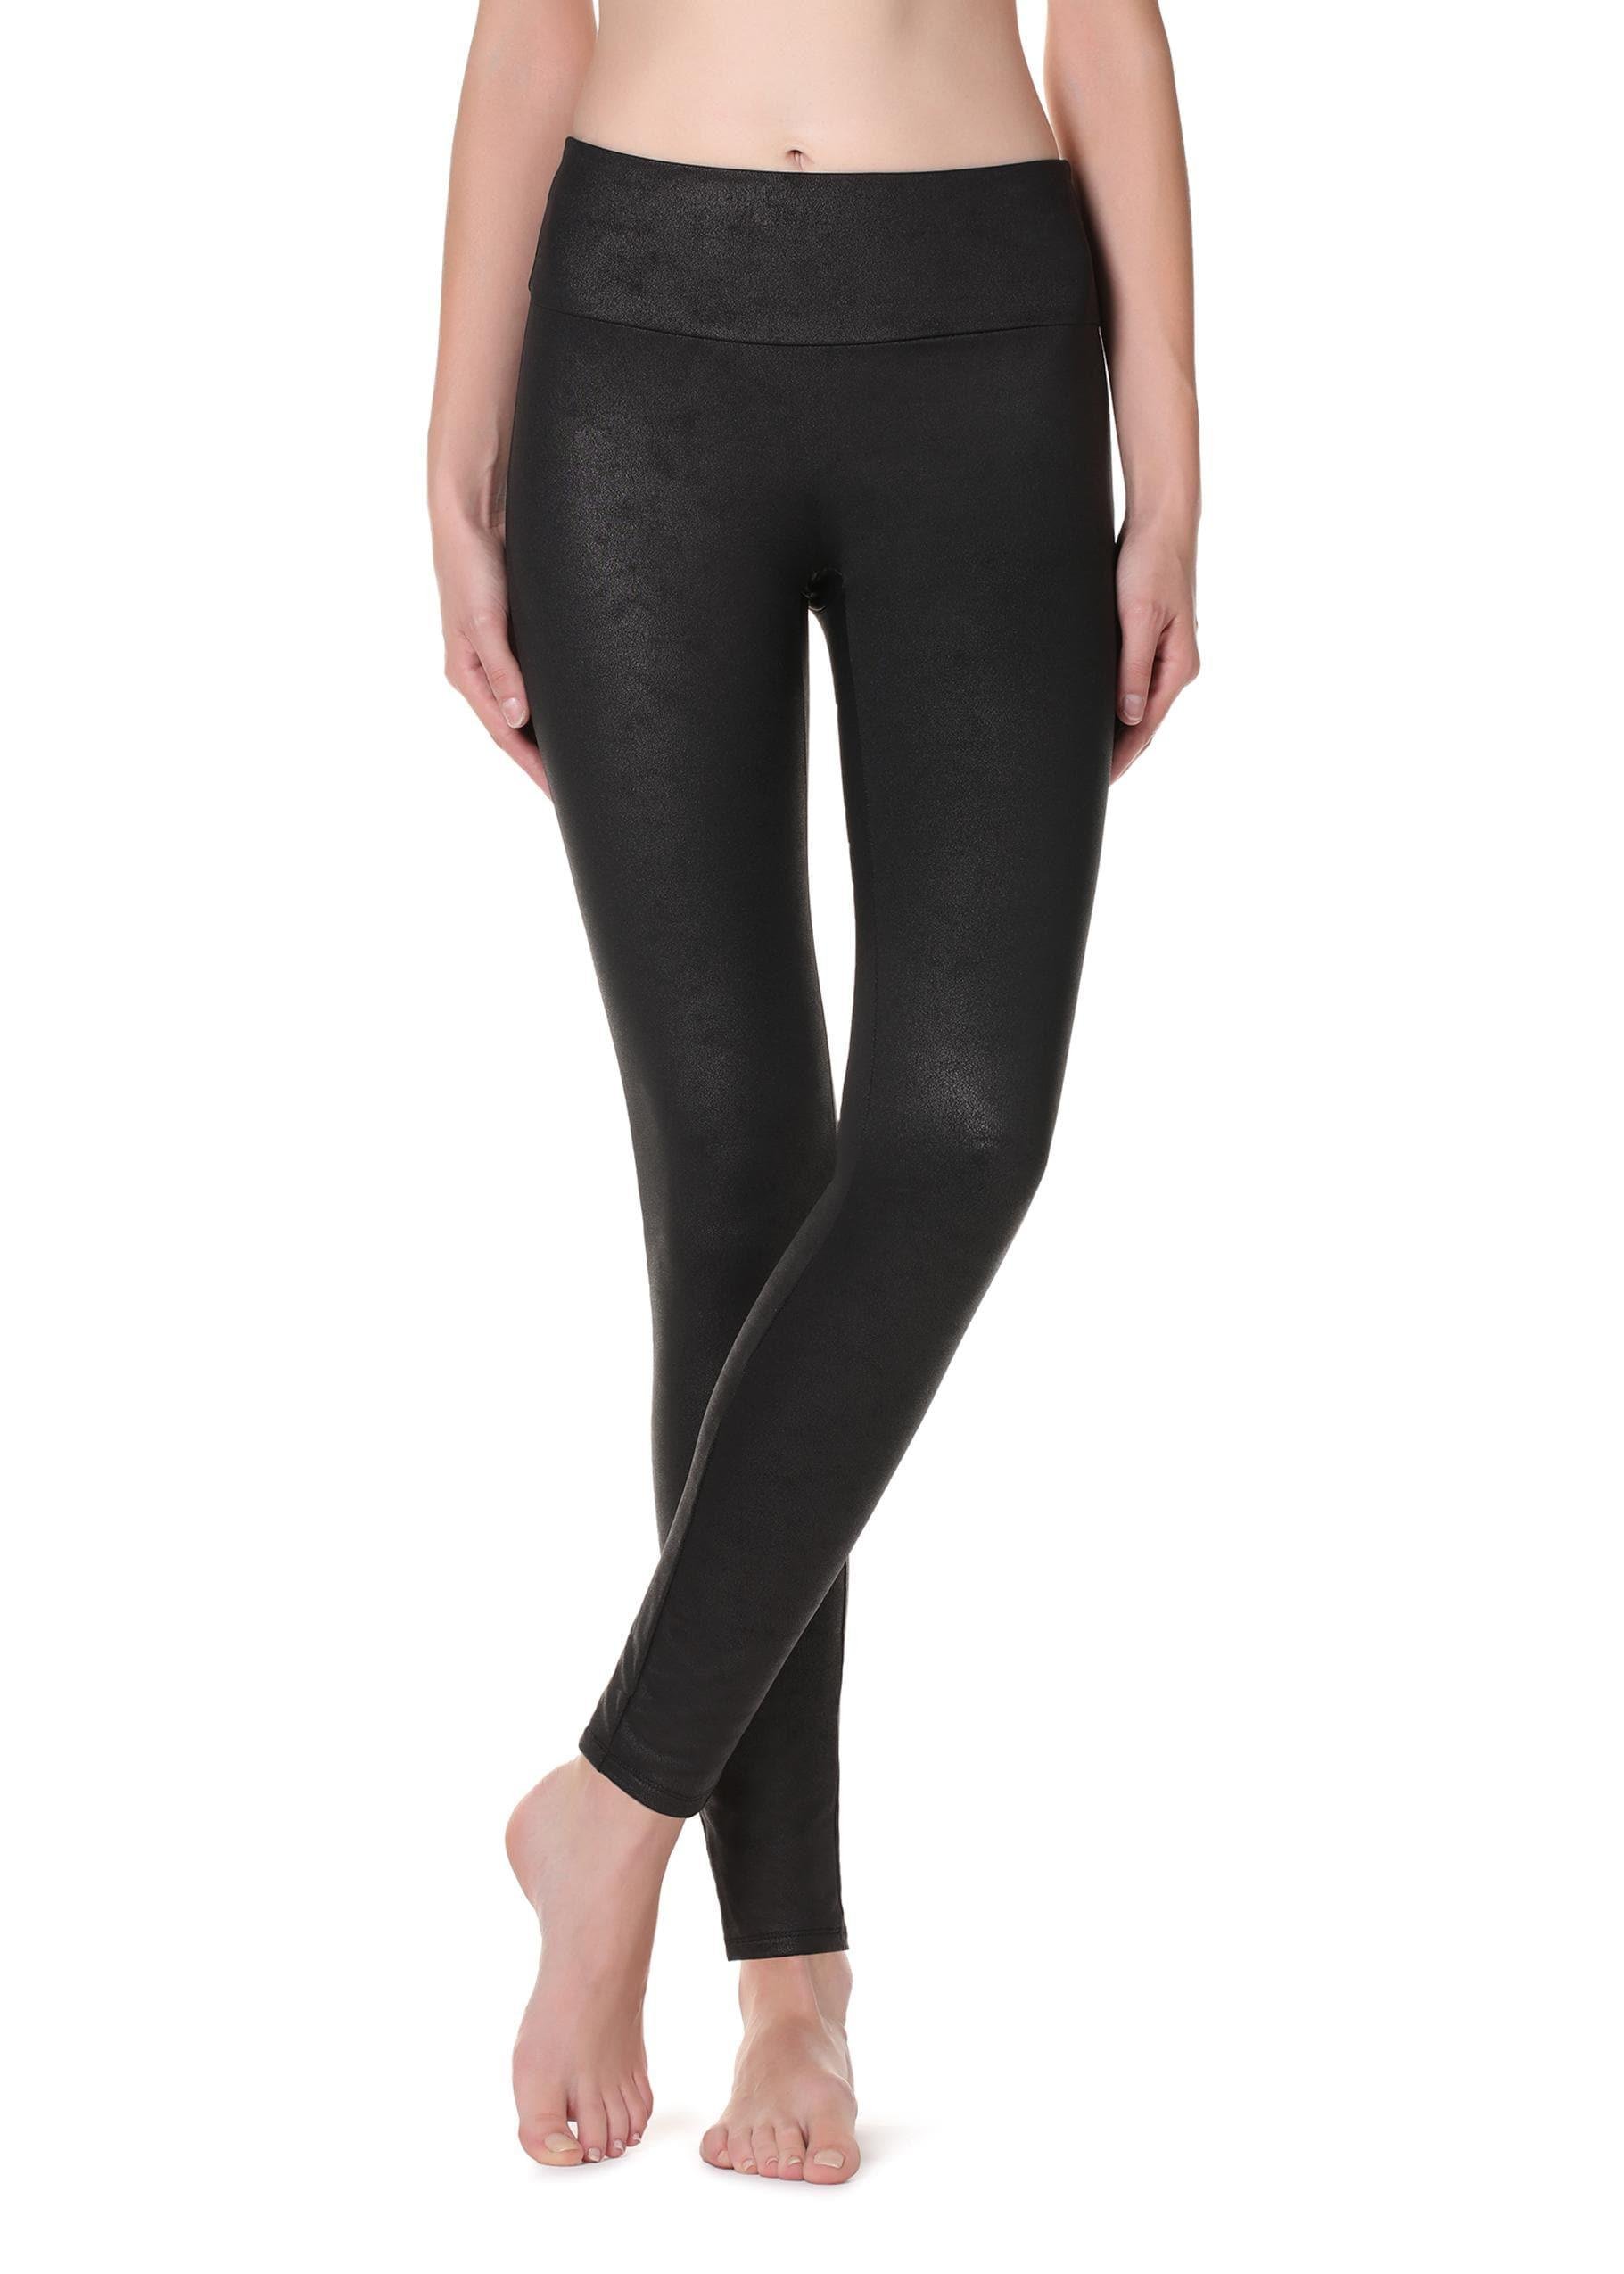 https://cdna.lystit.com/photos/calzedonia/04cdf3bd/calzedonia-Black-Total-Shaper-Thermal-Leather-Effect-leggings.jpeg